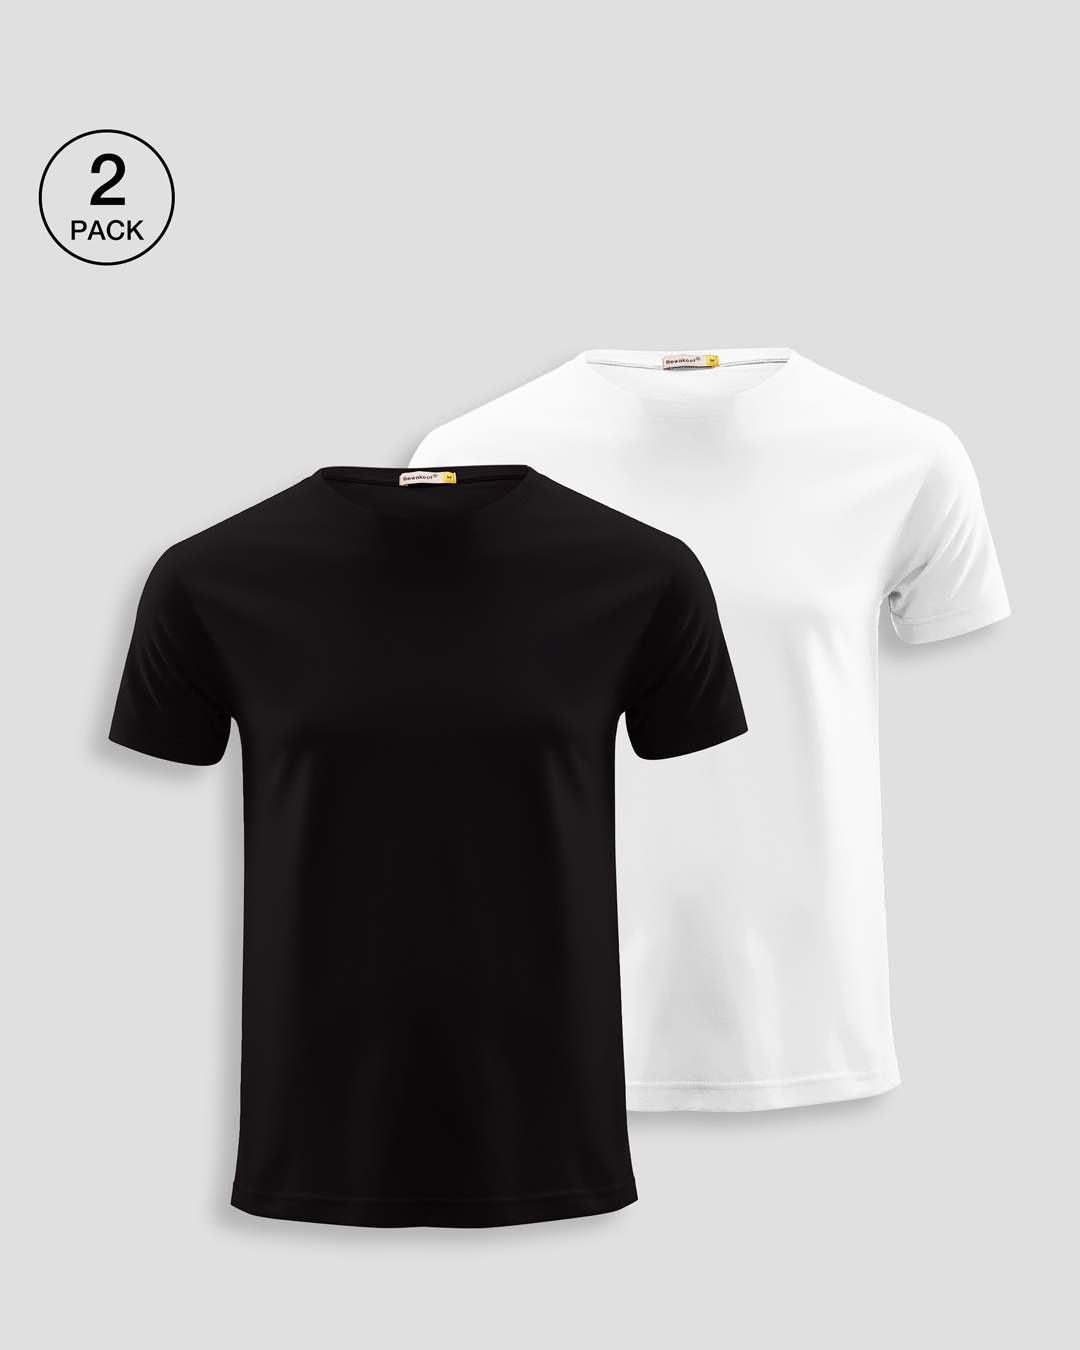 Buy Men S Plain Half Sleeve T Shirt Pack Of 2 Black White Plain Half Sleeve Men S Plain Half Sleeve T Shirt Pack Of 2 For Men Online India Bewakoof Com